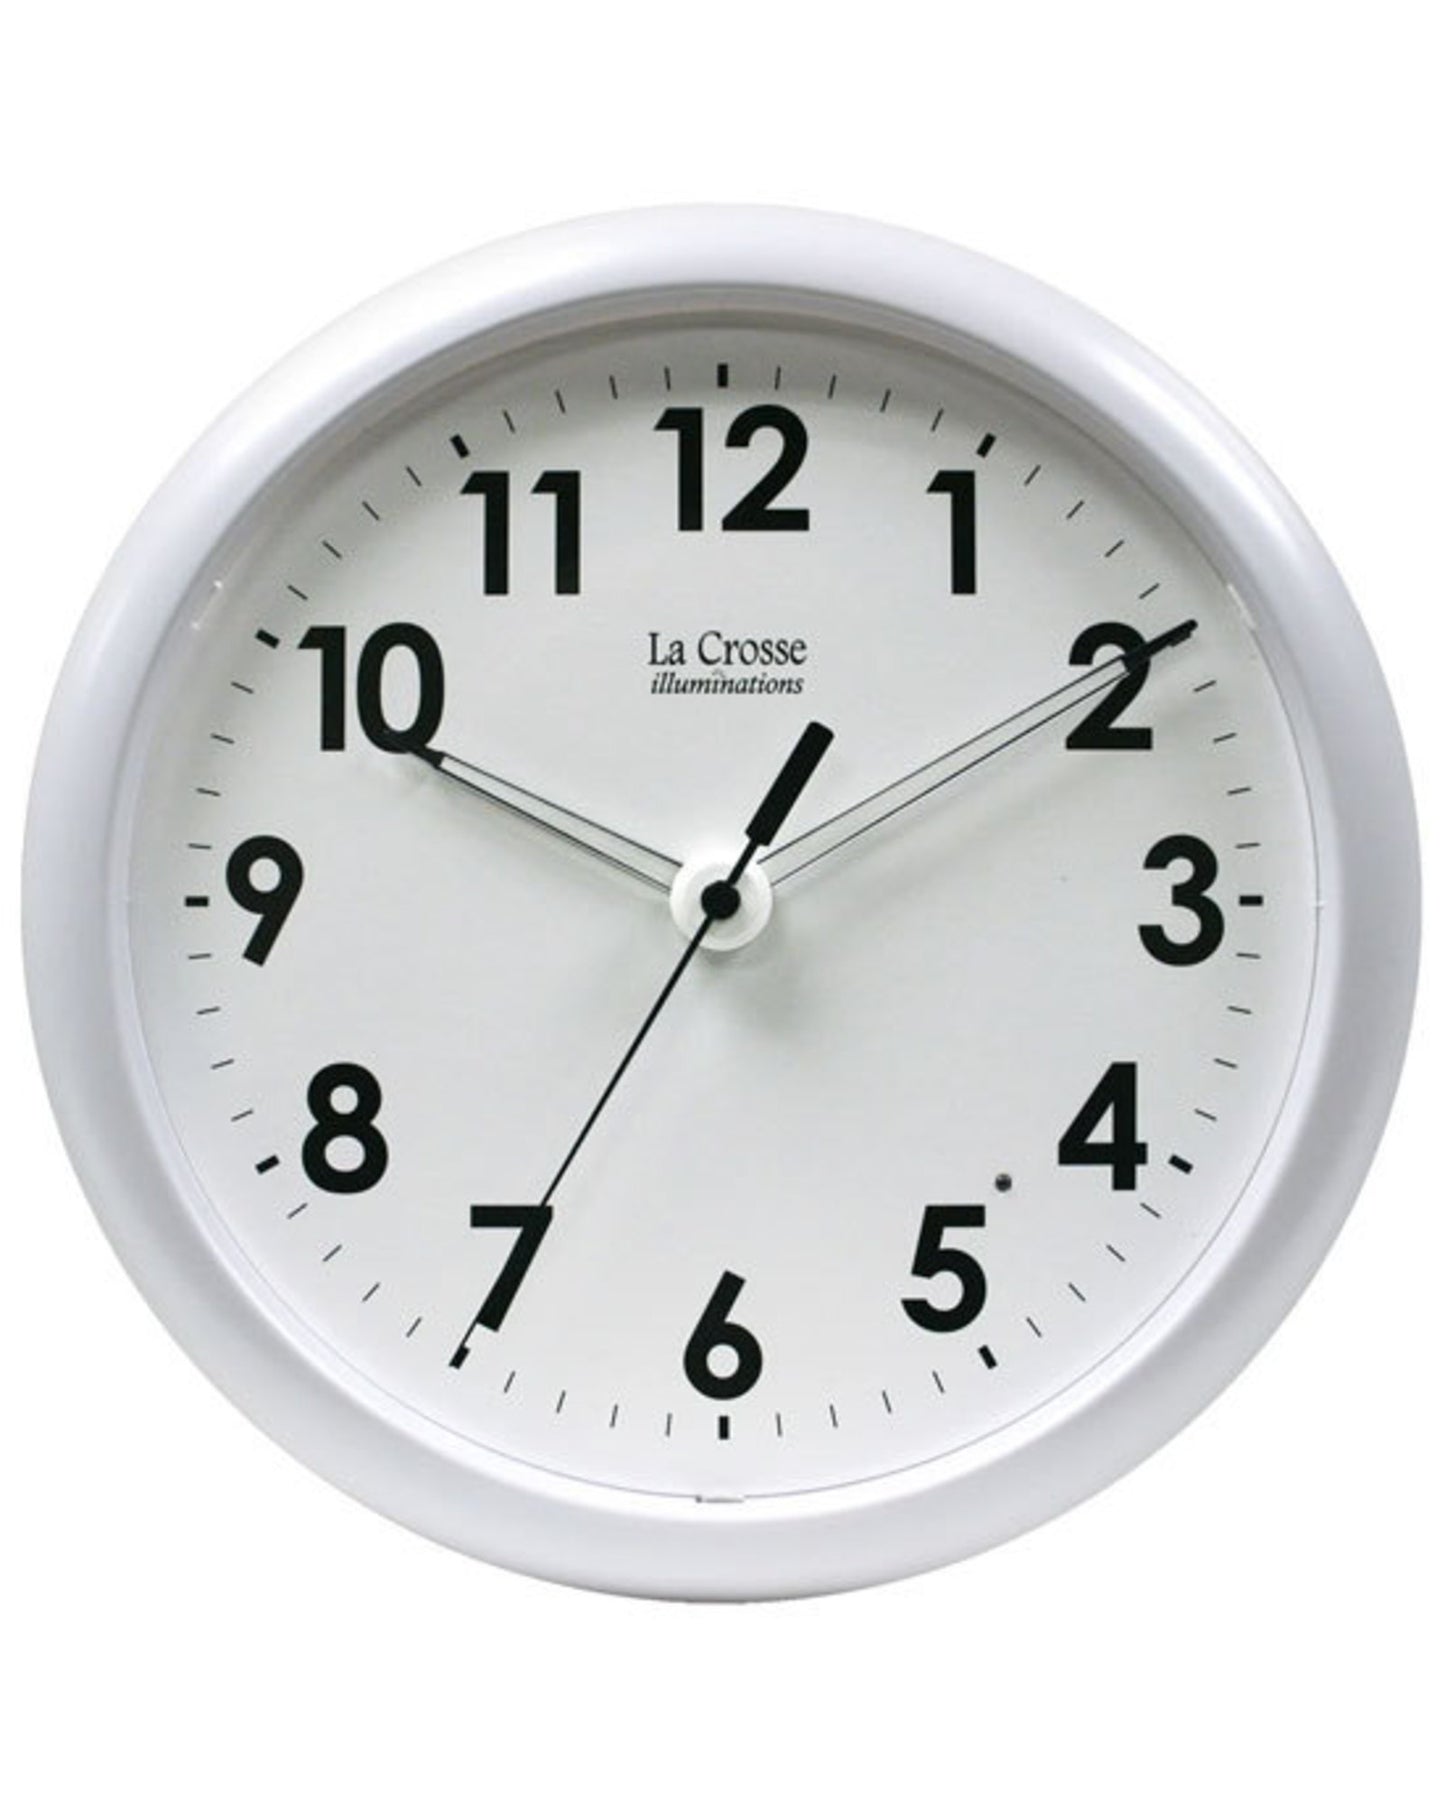 403-310 La Crosse 25cm Wall Clock with Glowing Hands